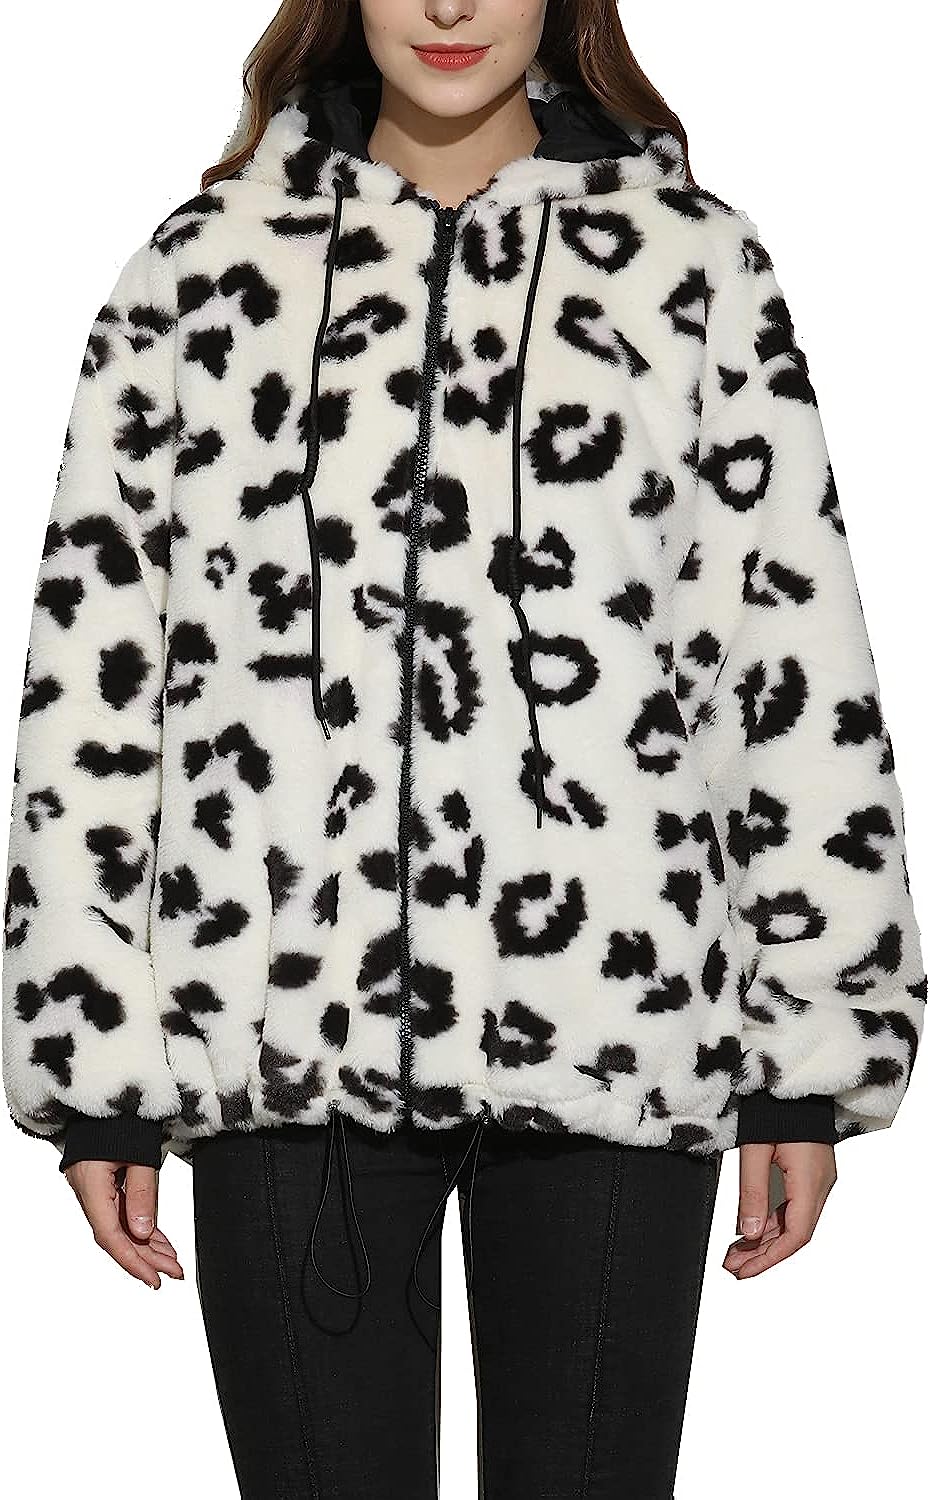 Faux Mink White Cheetah Printed Long Sleeve Hooded Fur Jacket